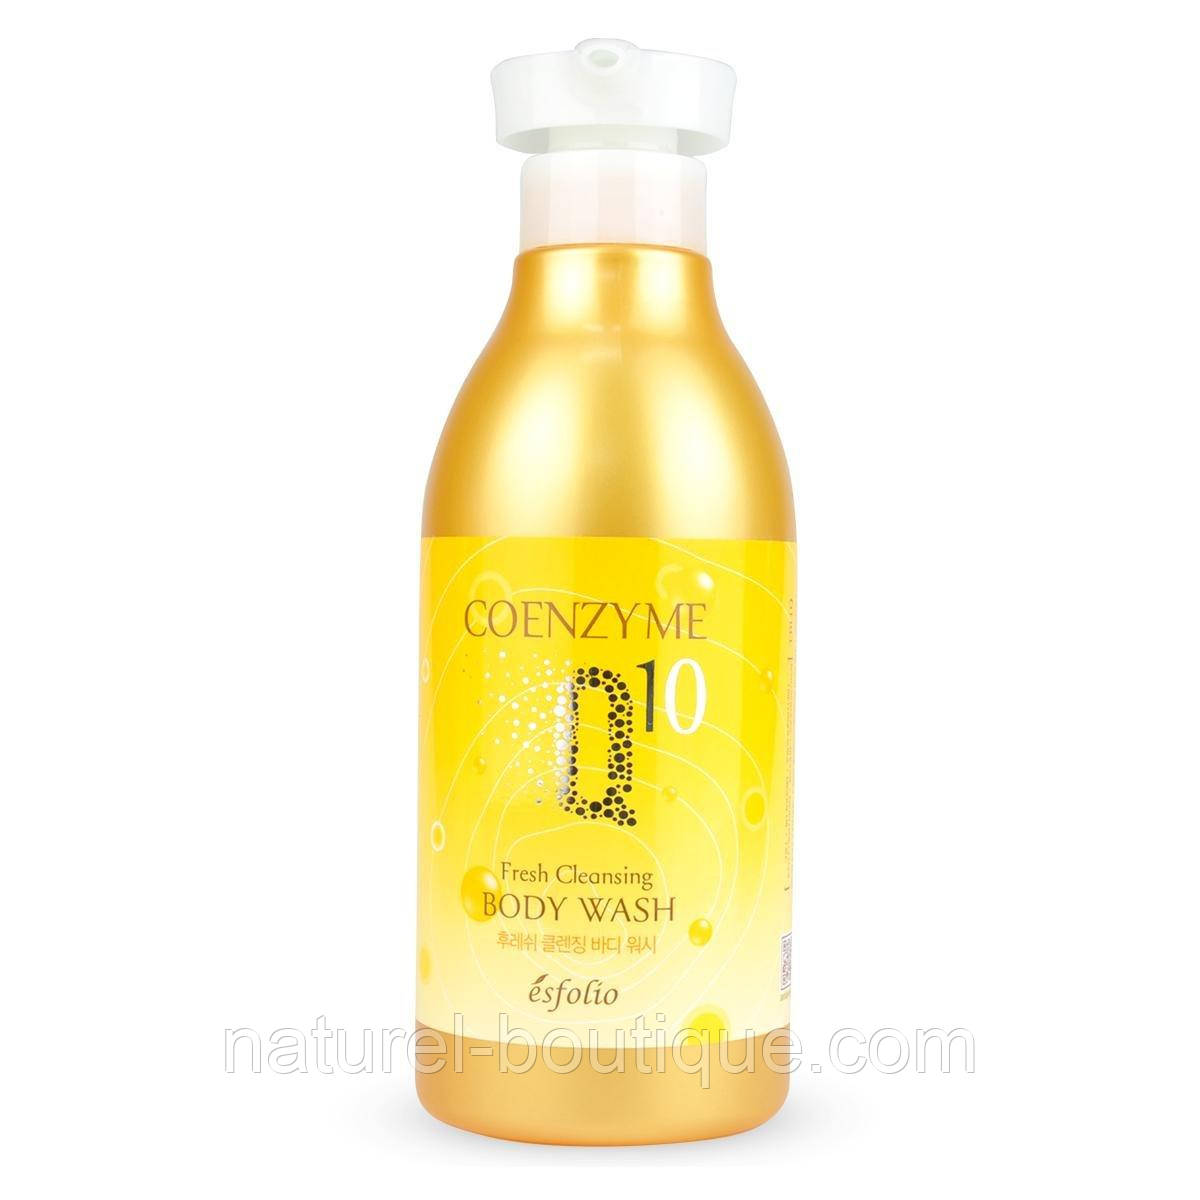 Гель для душа Esfolio Coenzyme Q10 Fresh Cleansing Body Wash 
з коензимом Q10